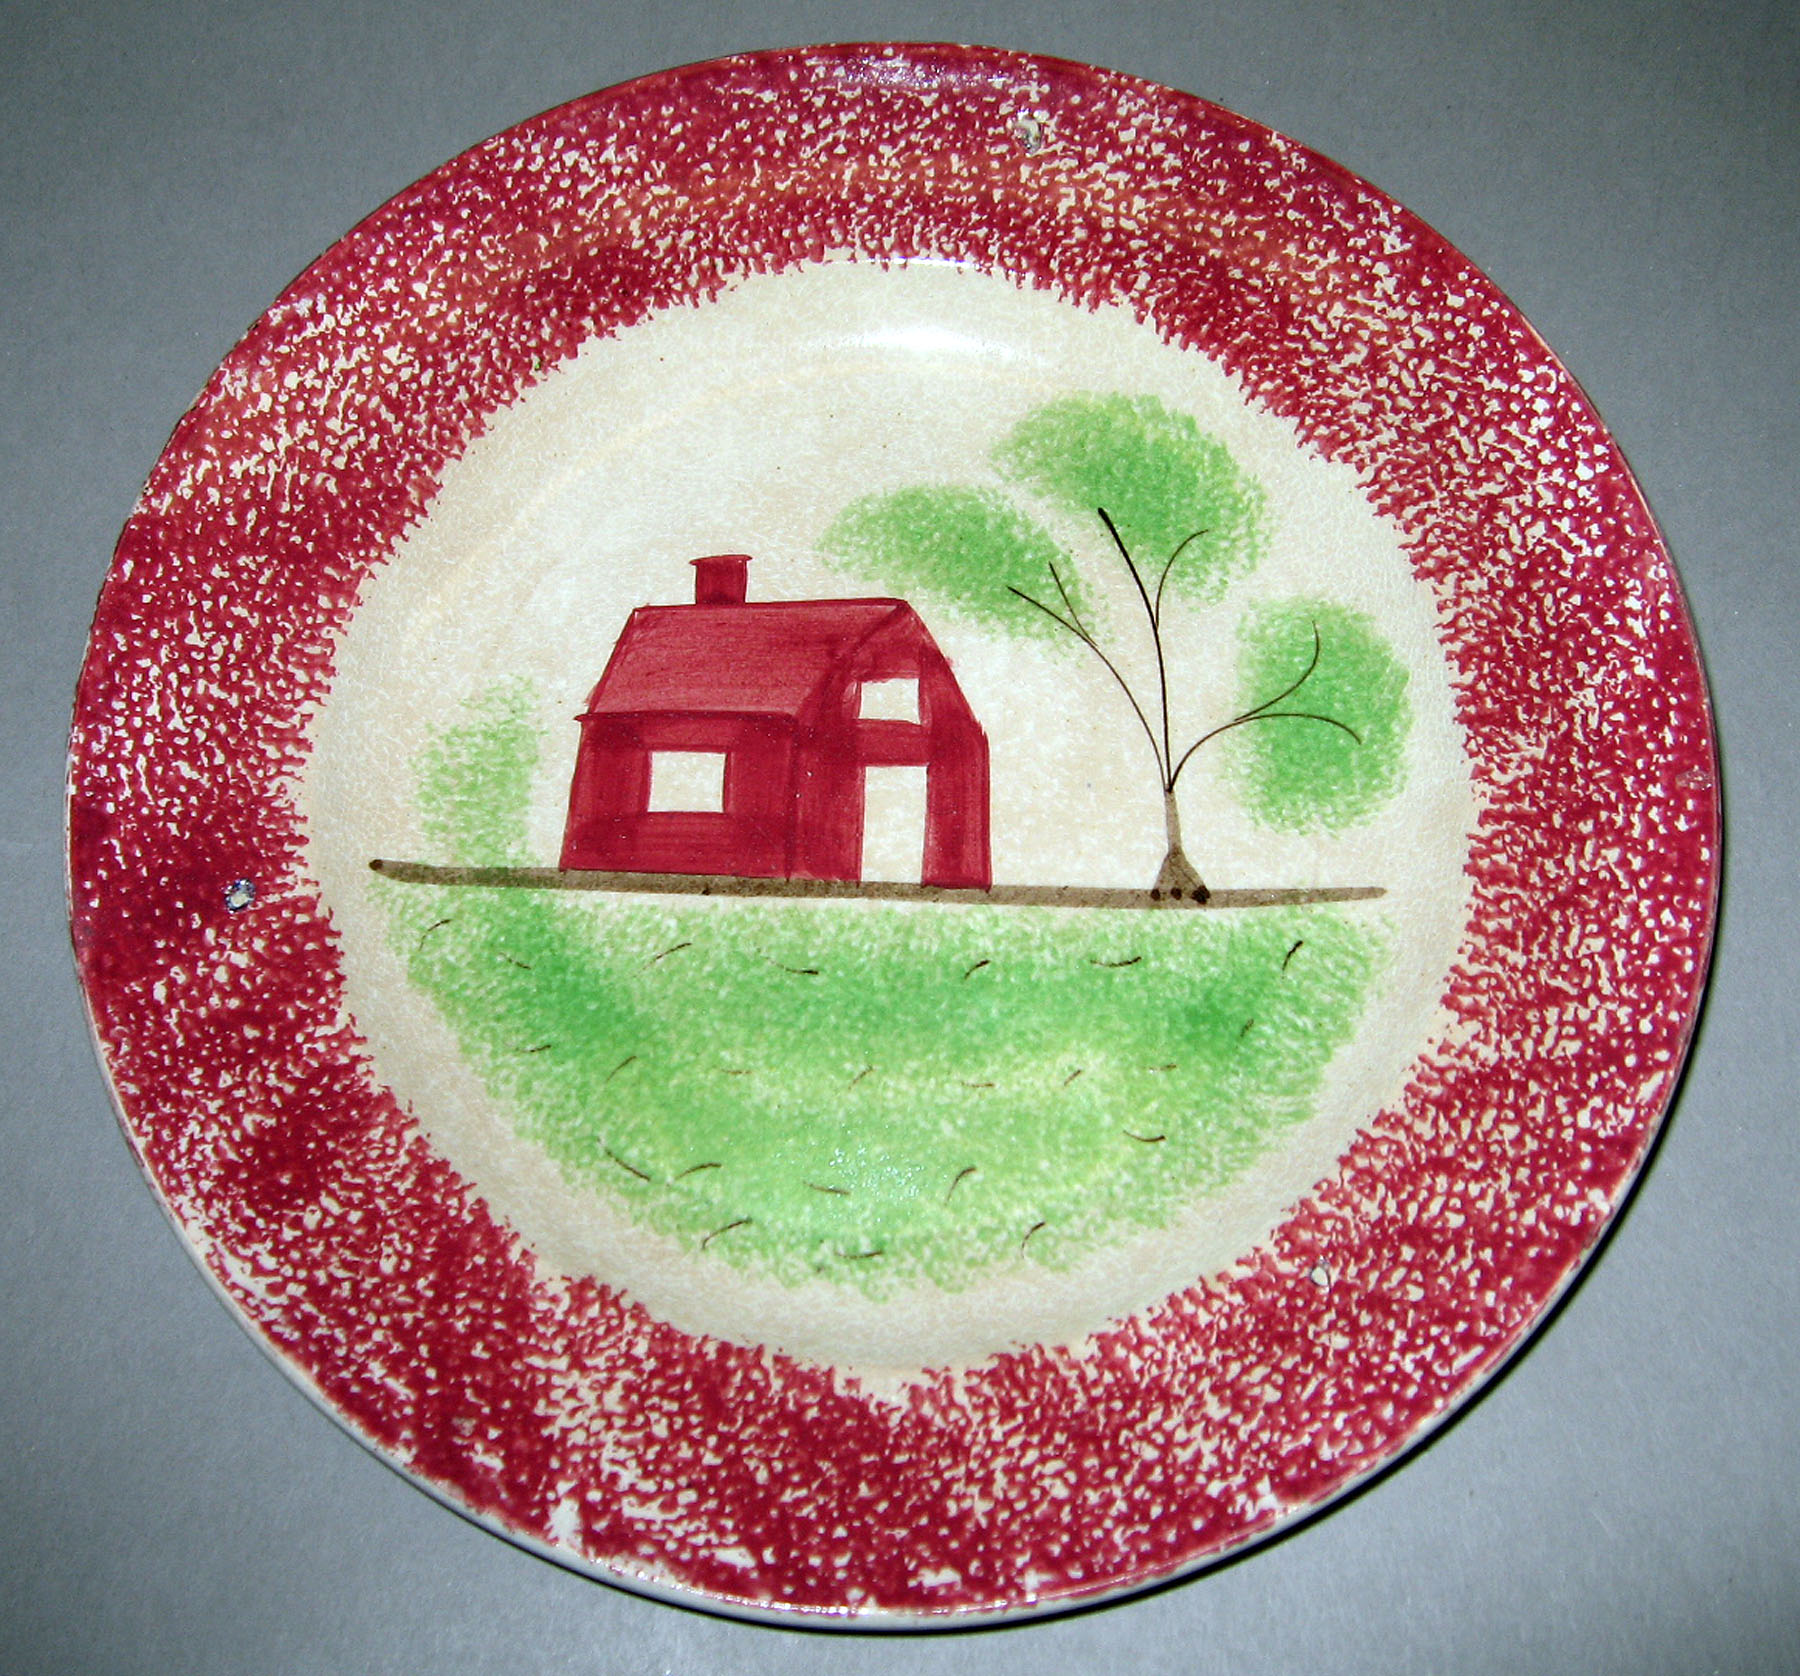 1965.0776.004 Spatterware plate